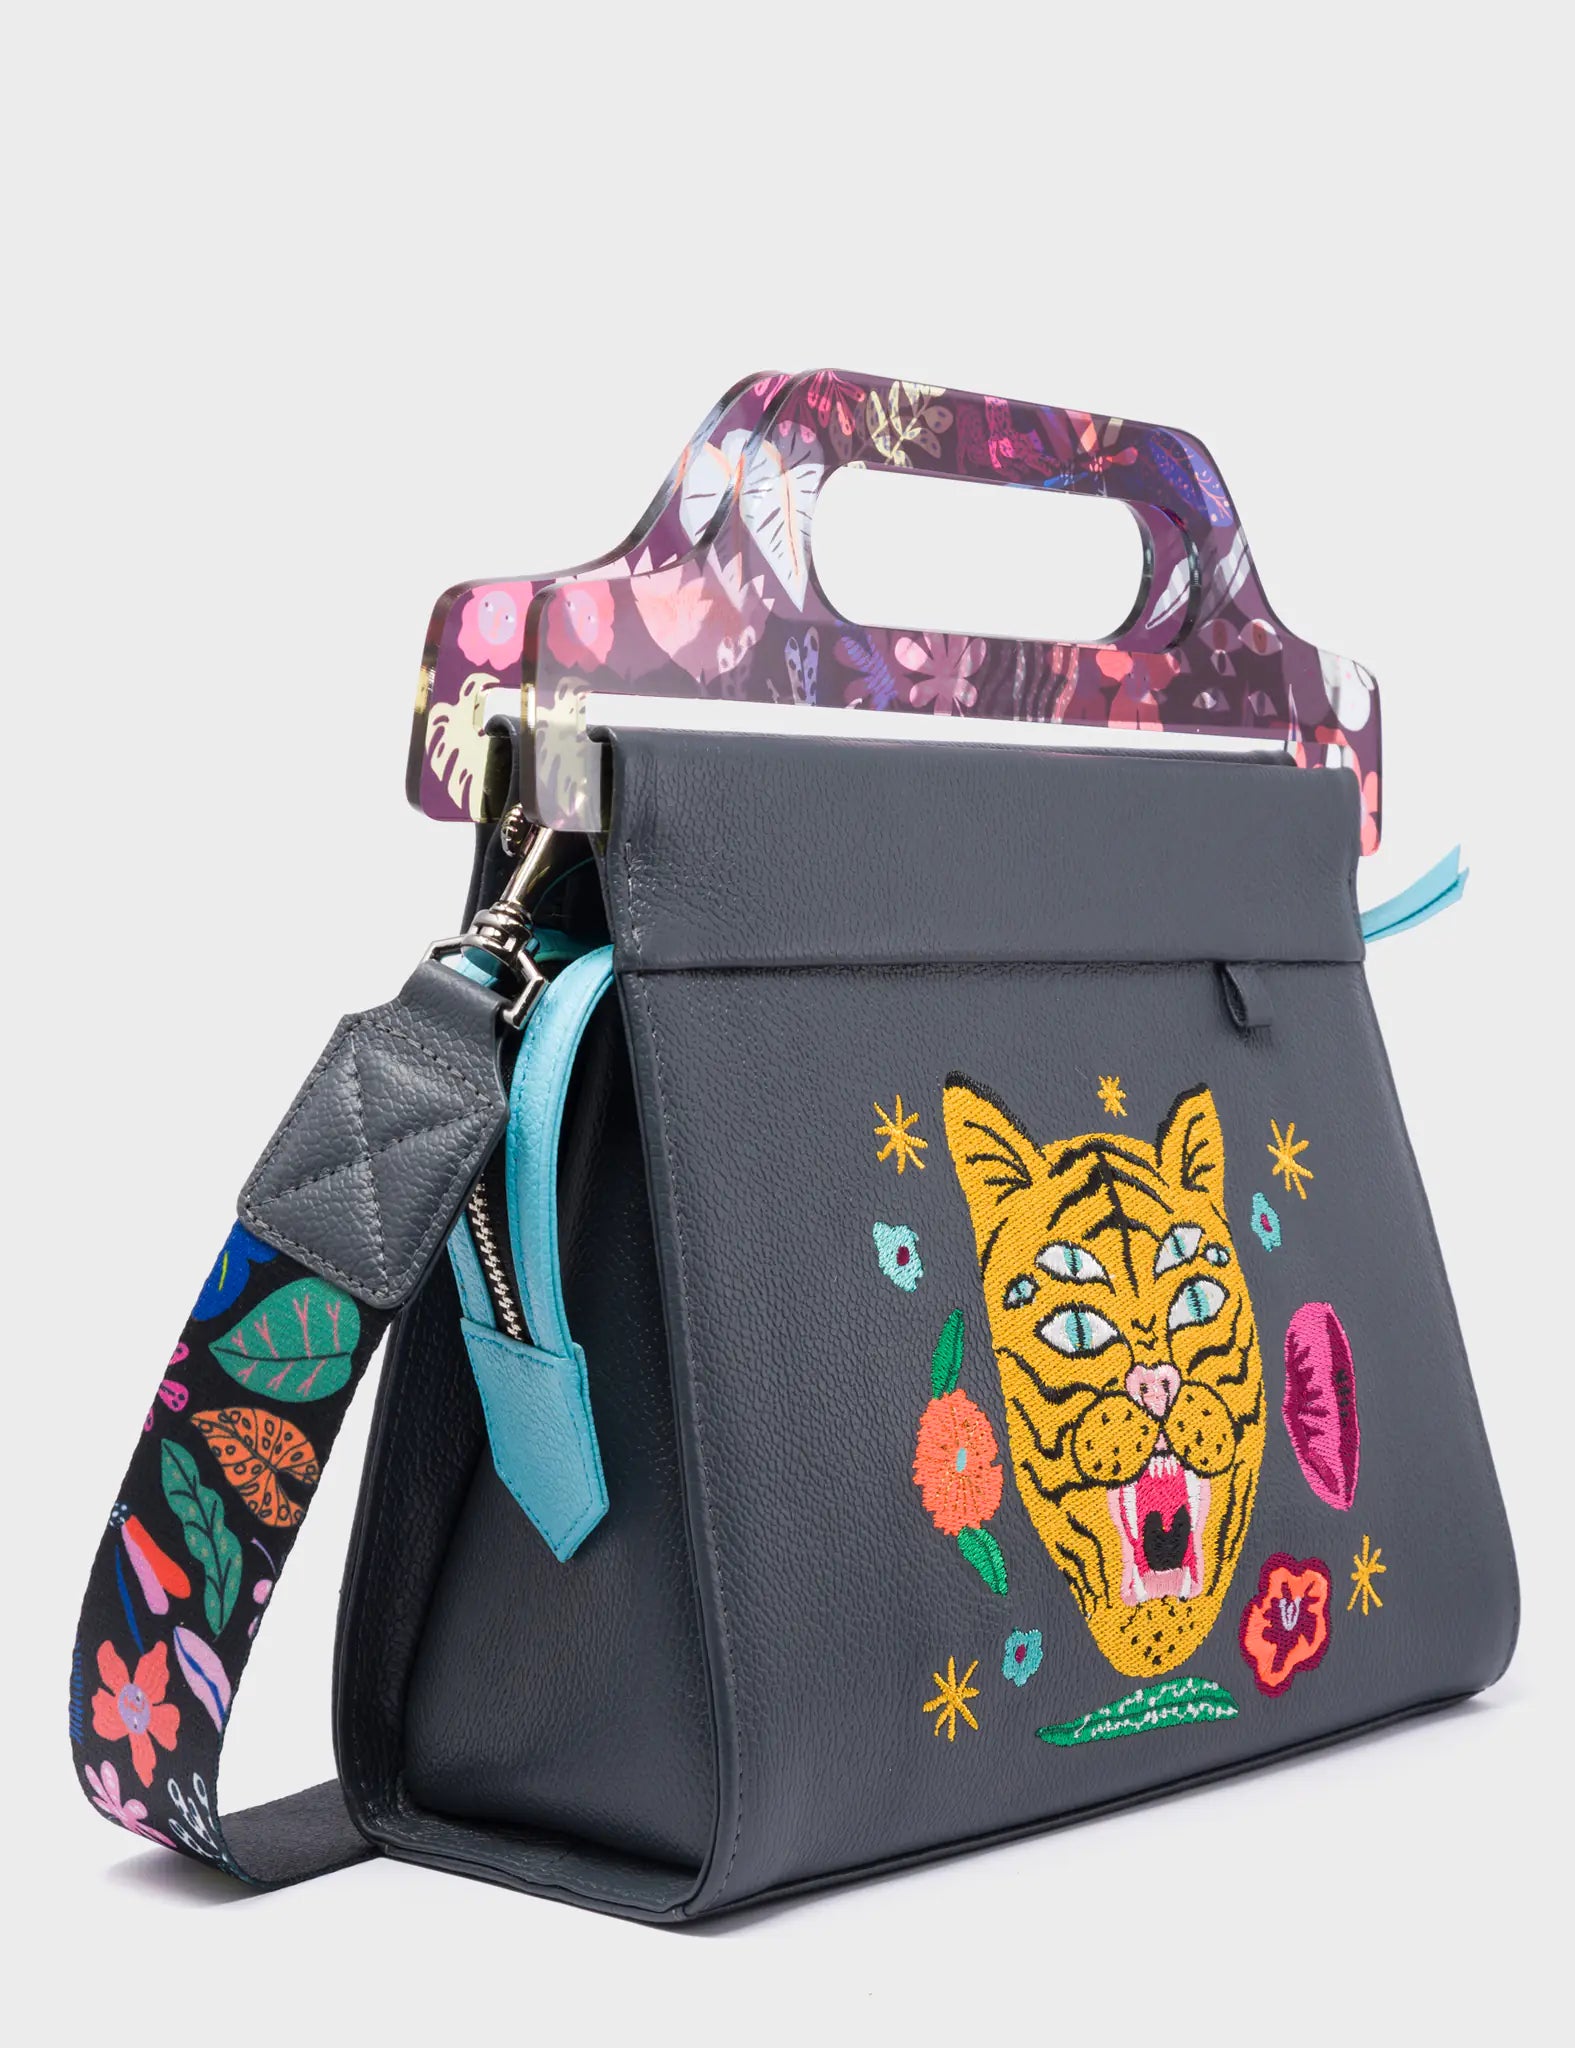 Vali Black Leather Crossbody Handbag Plastic Handle - Tiger and Flowers Design Side View